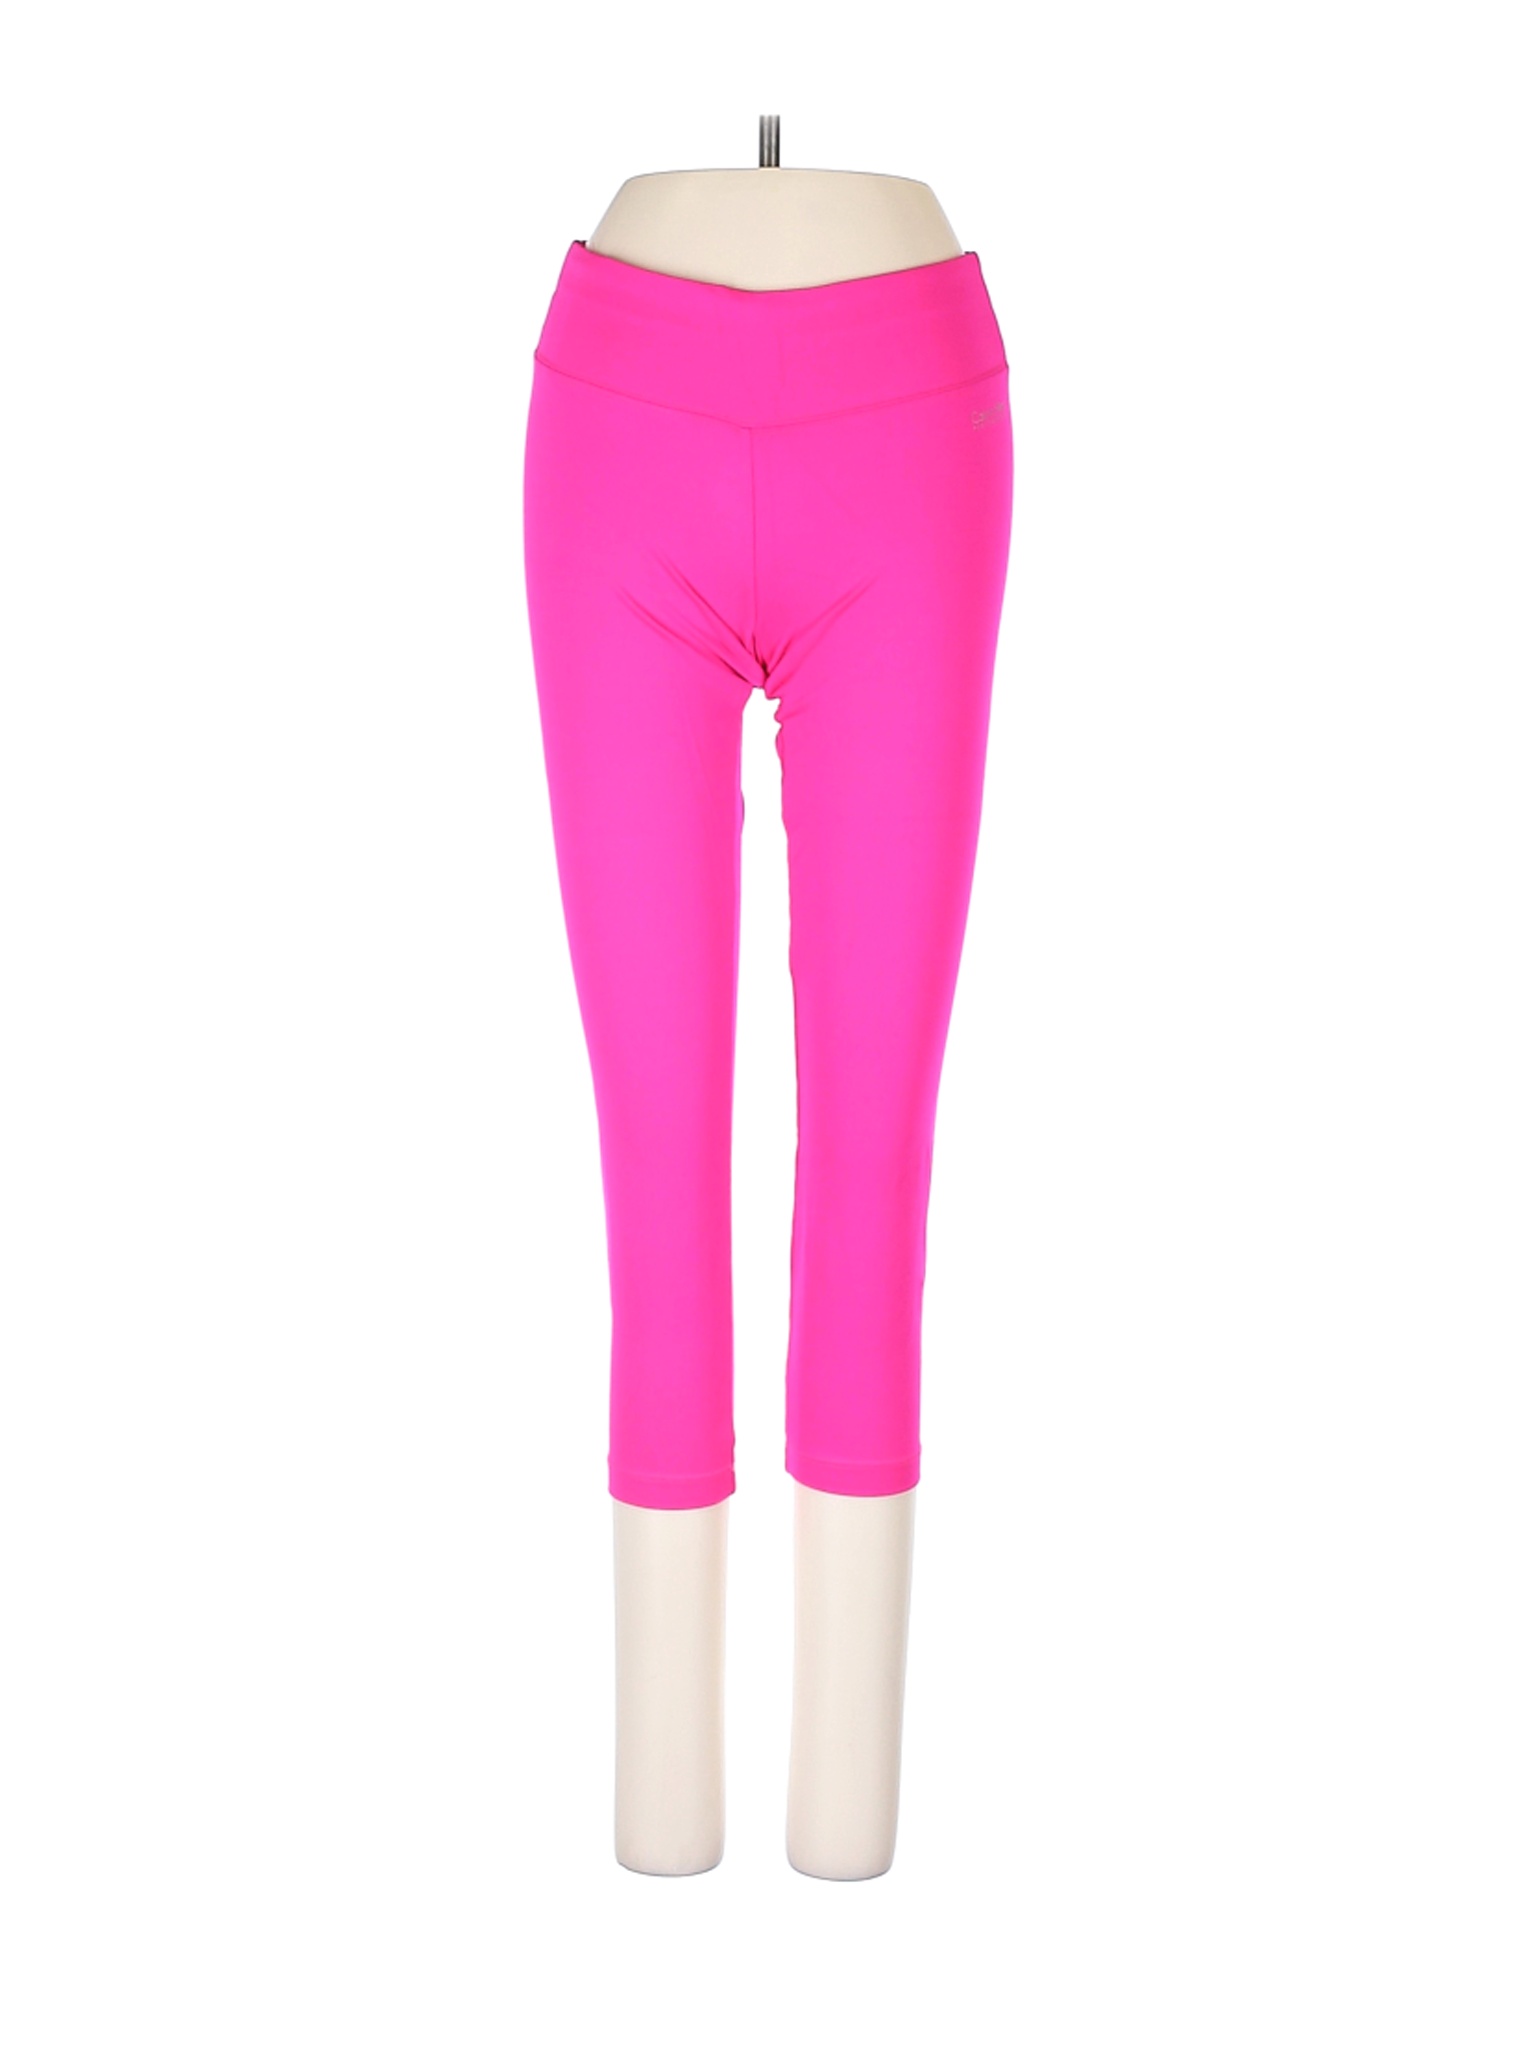 Calvin Klein Performance Women Pink Active Pants XS | eBay